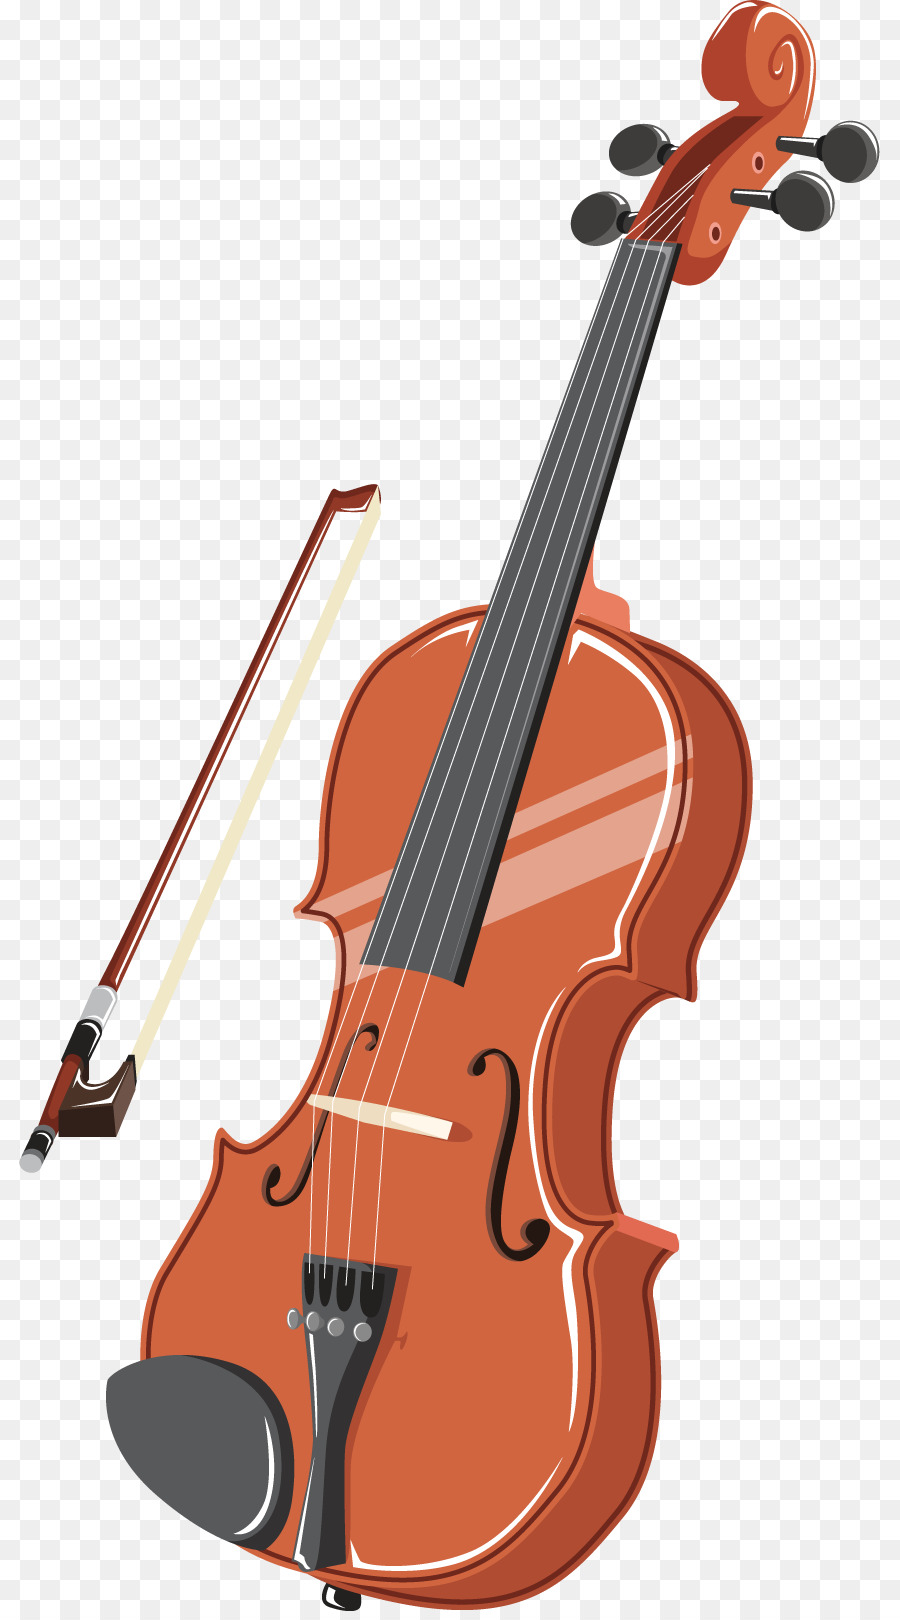 100 Gambar Alat Musik Cello Paling Hist - Gambar Pixabay